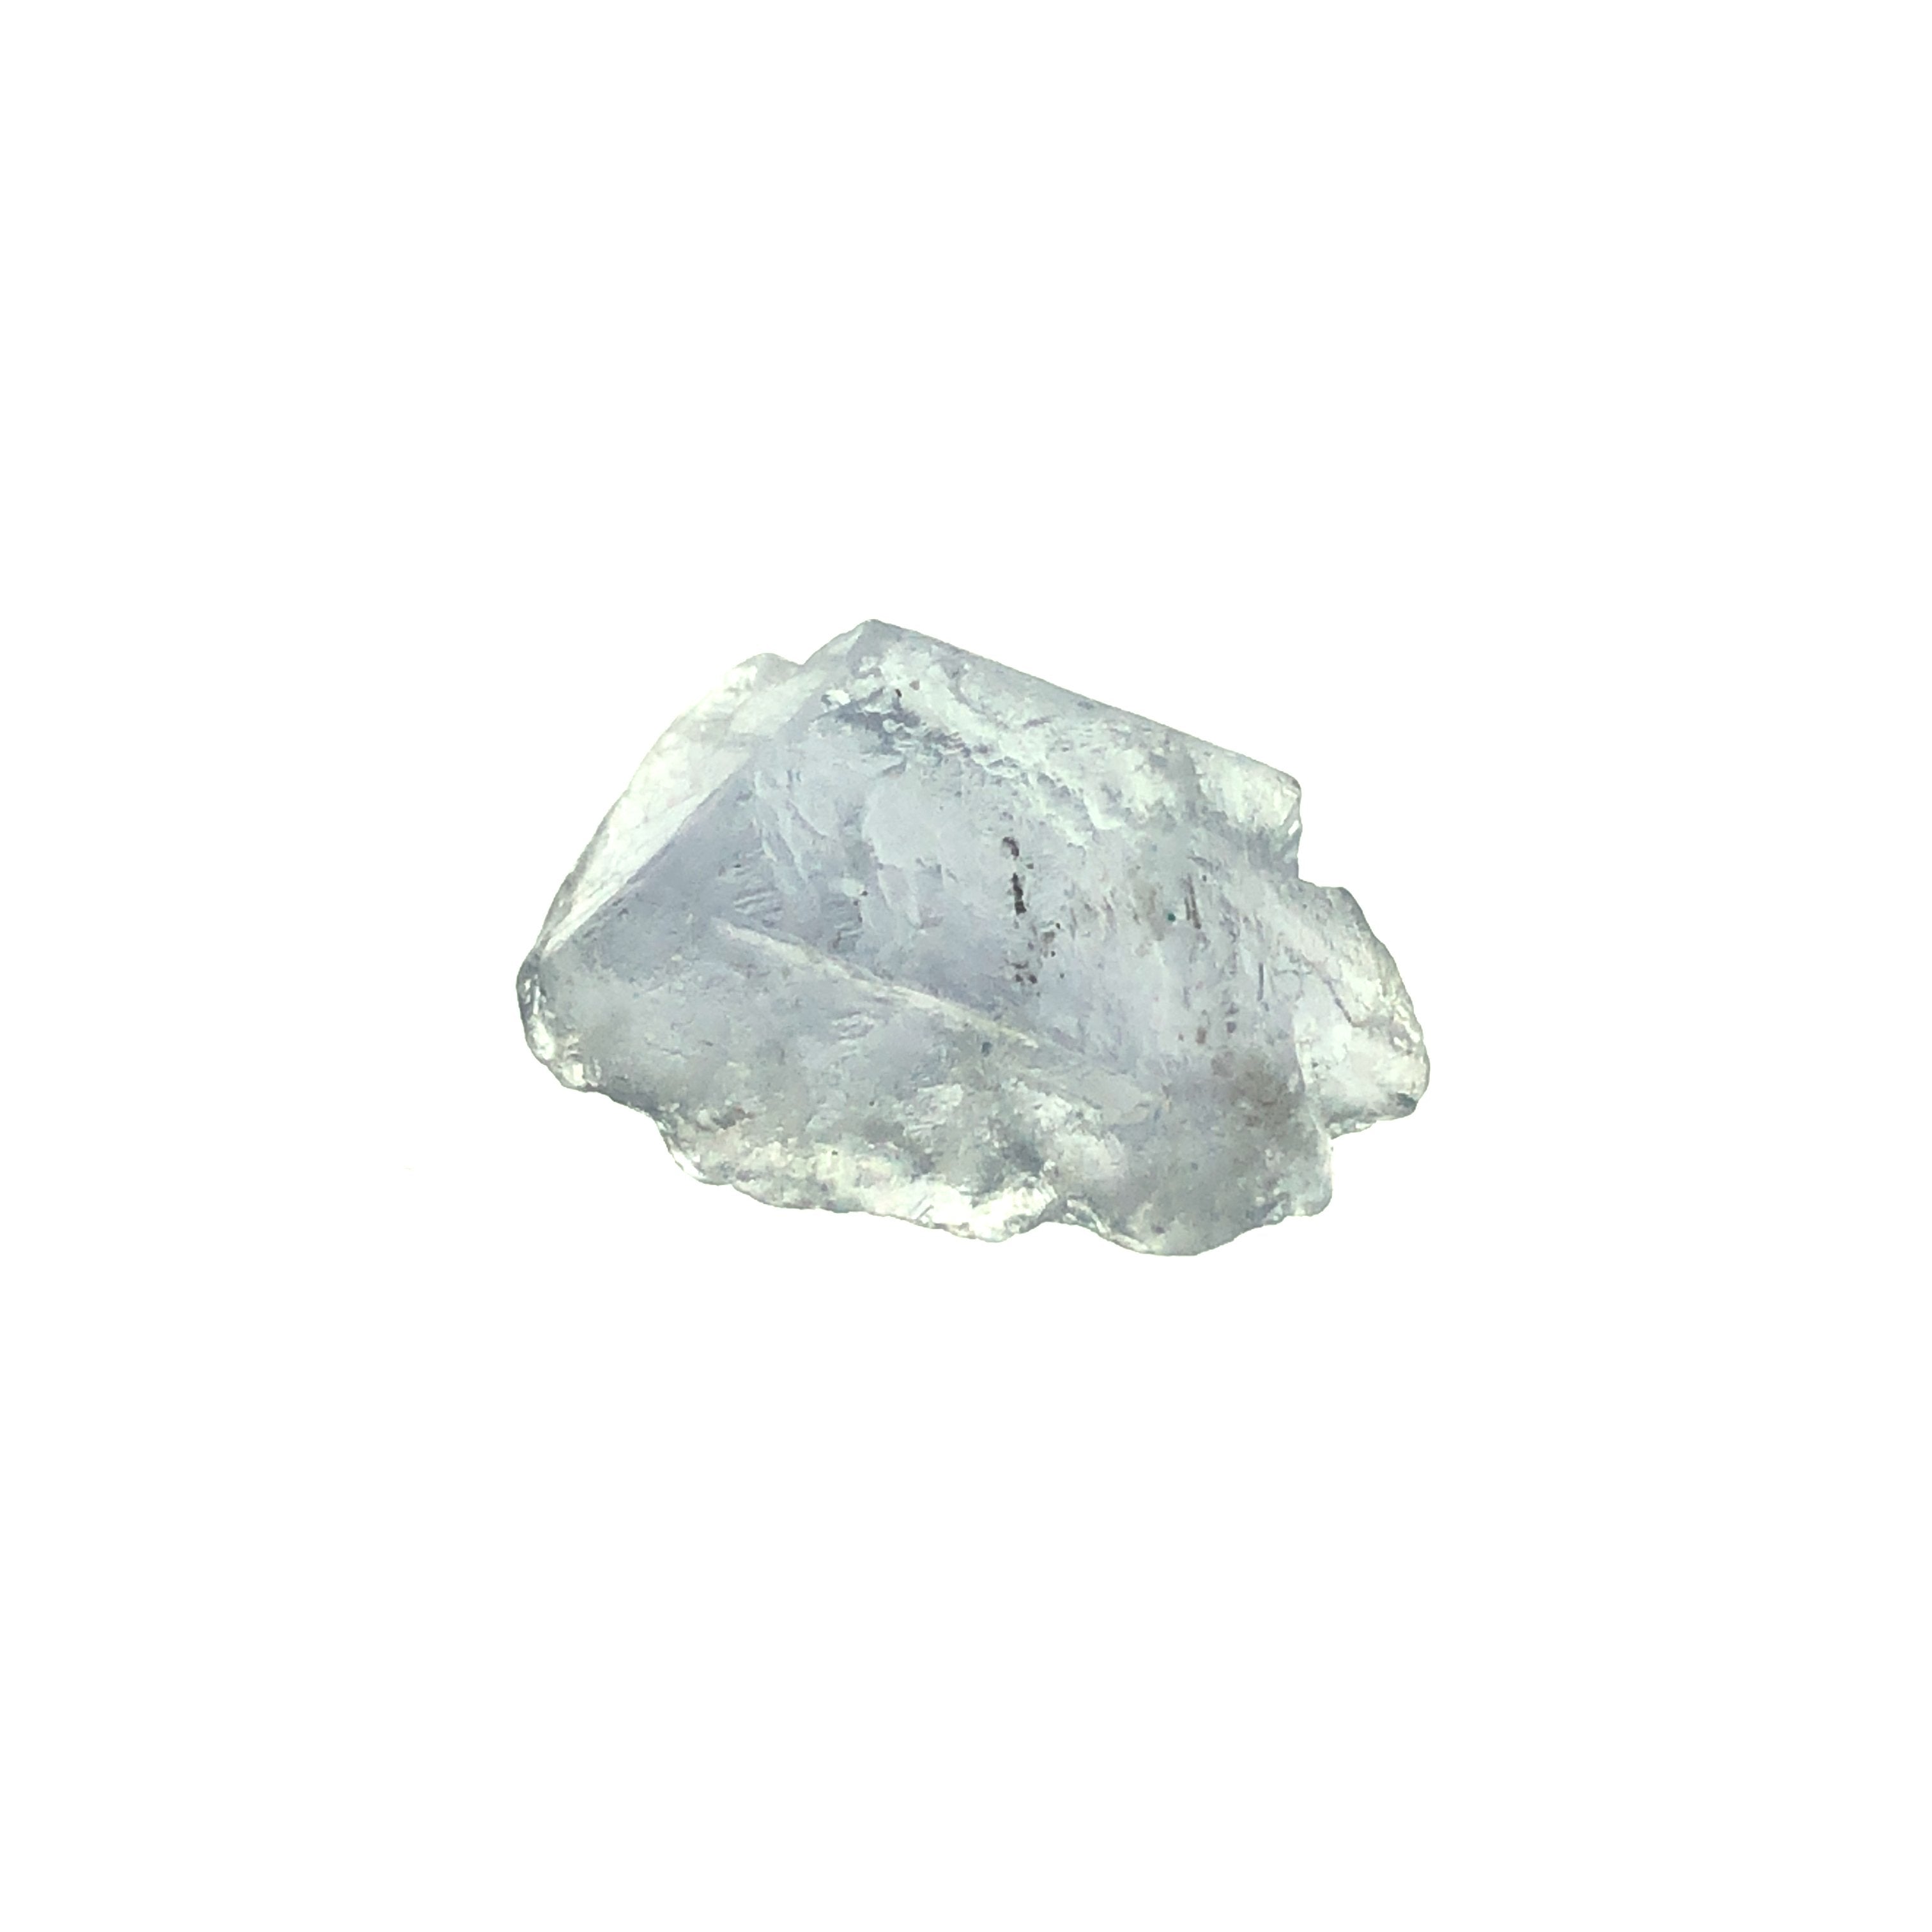 Rough Fluorite from Pakistan - 16.25 CTW